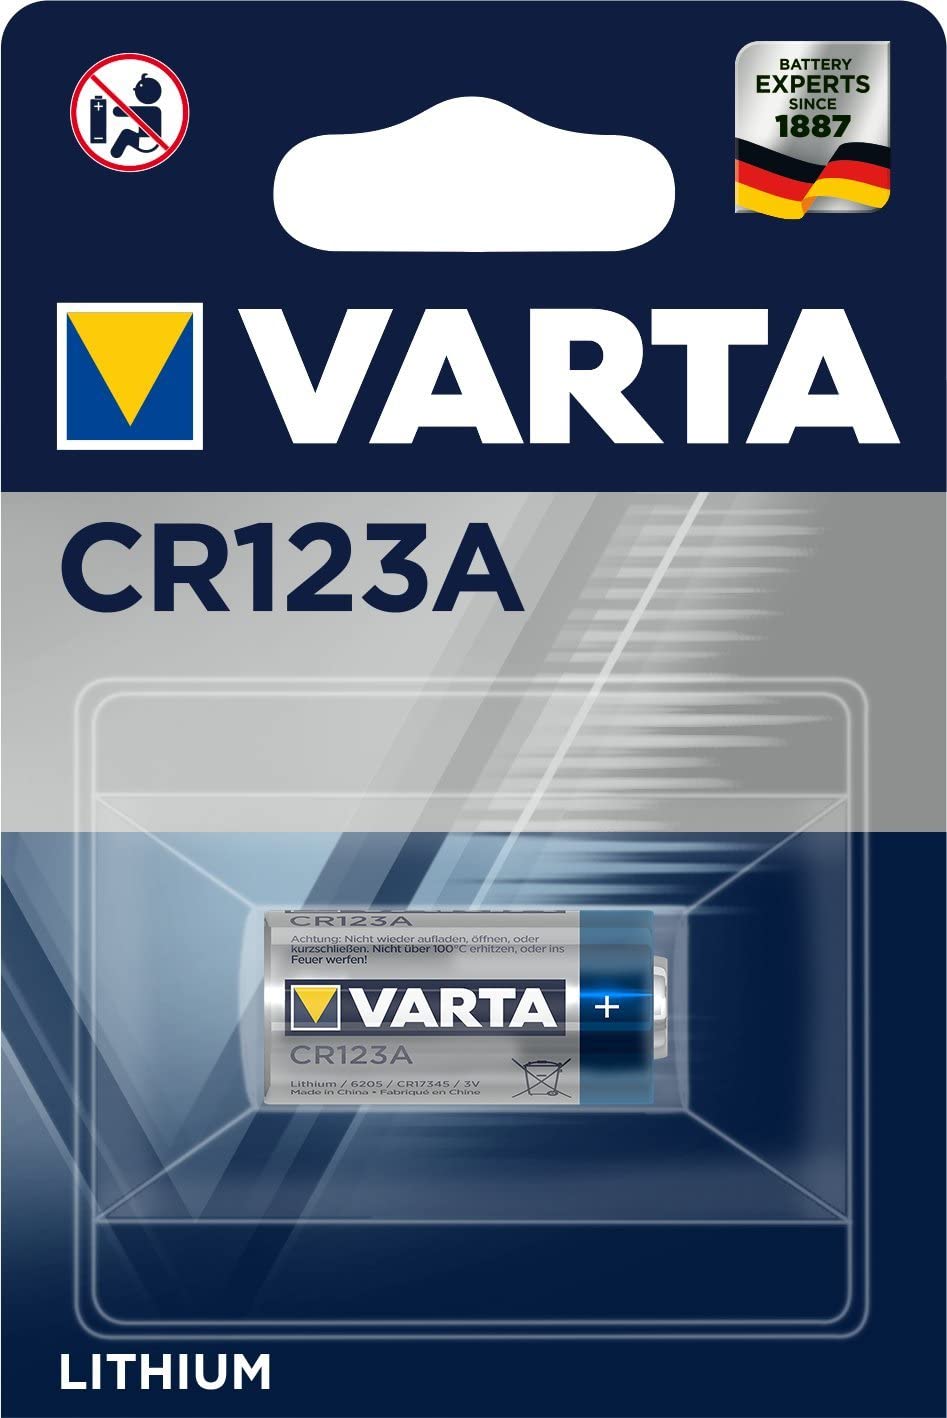 CR123A Lithium batteries by varta